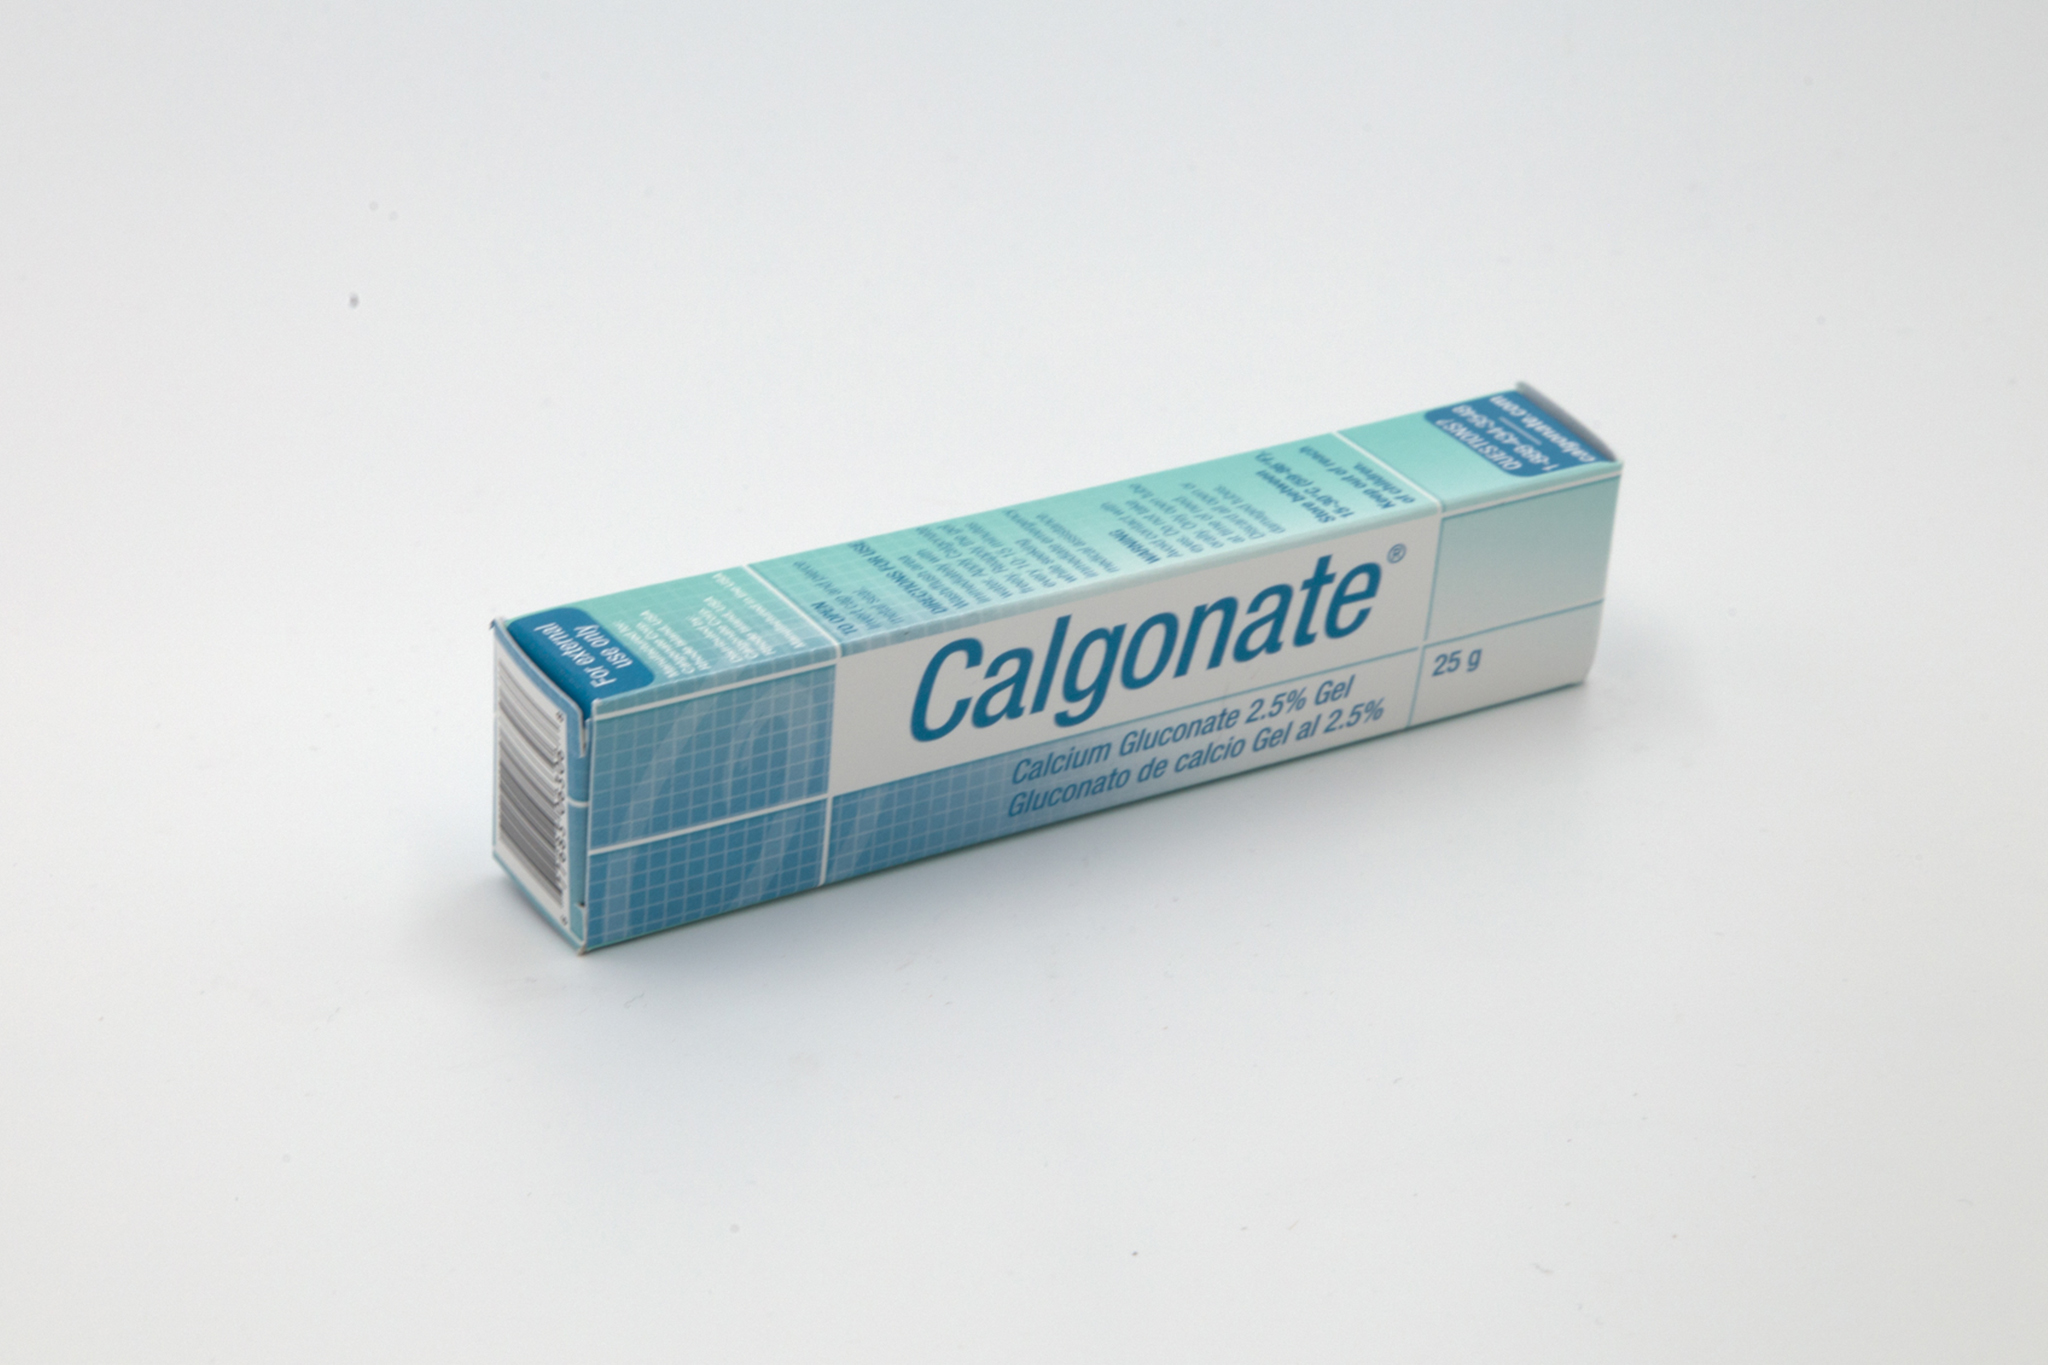 Box of calcium gluconate on white background